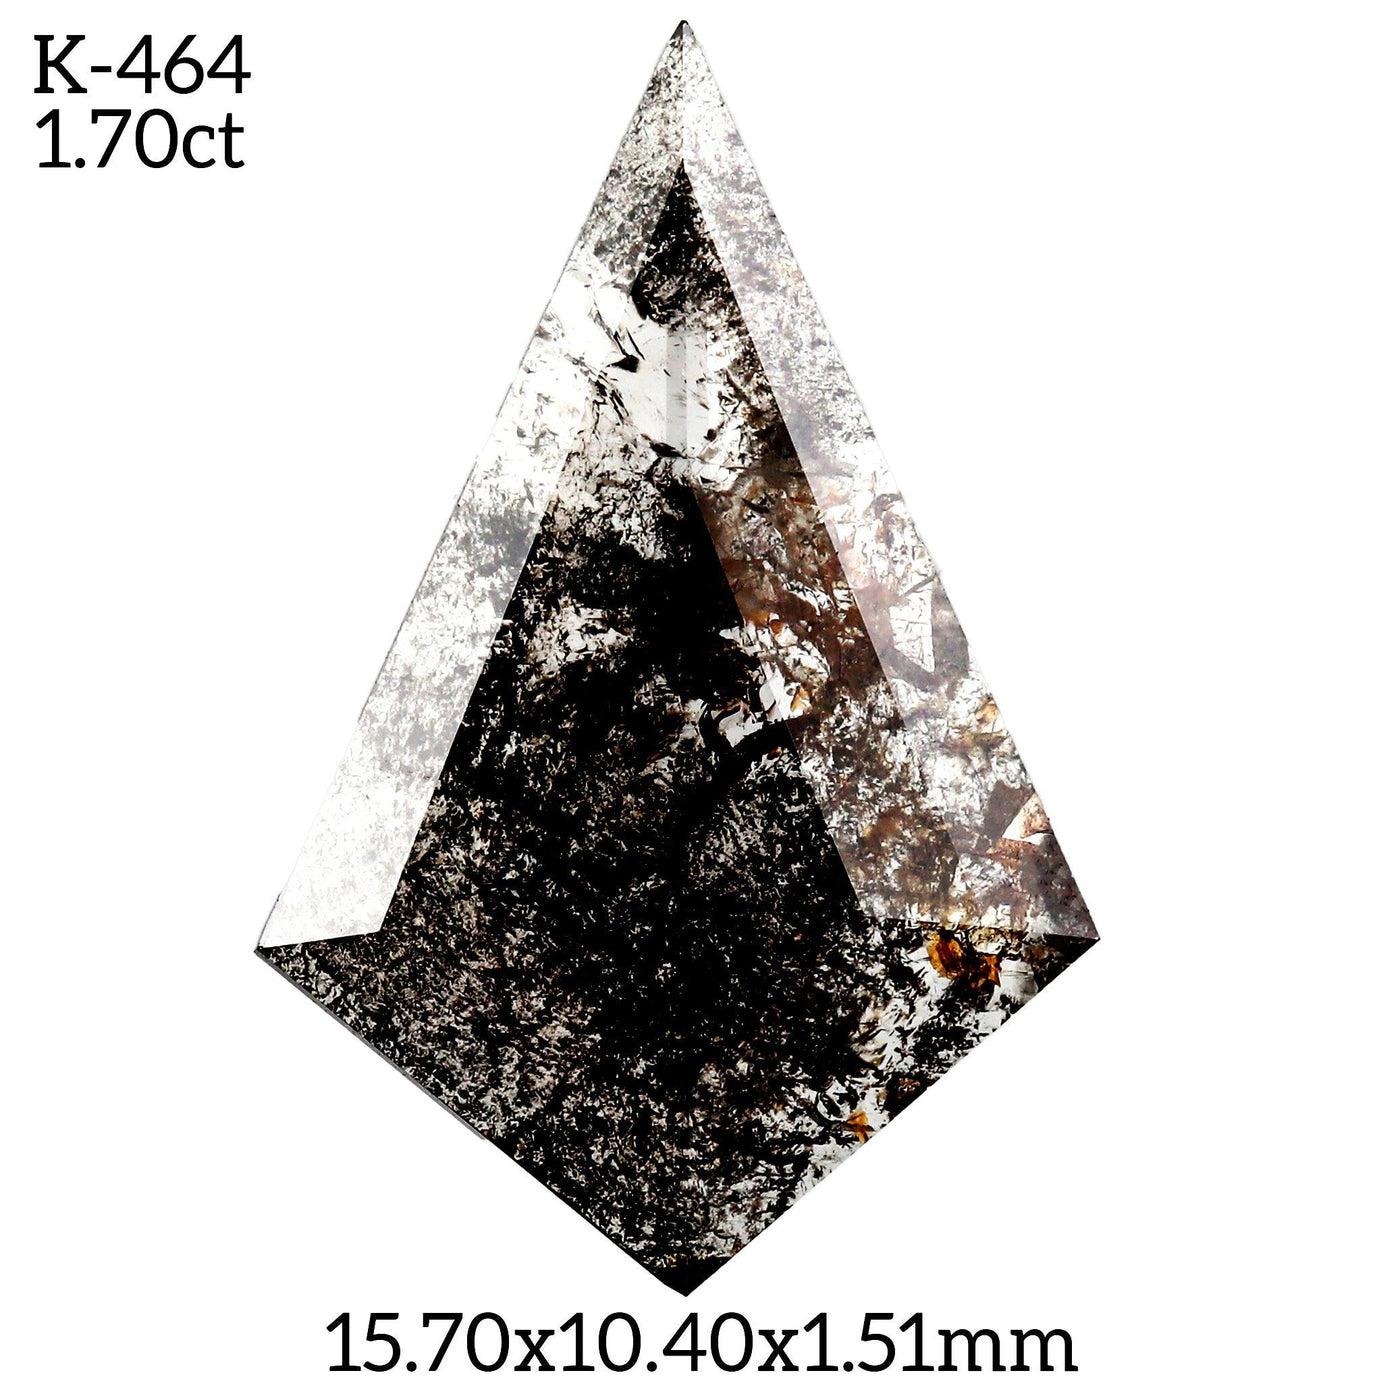 K464 - Salt and pepper kite diamond - Rubysta